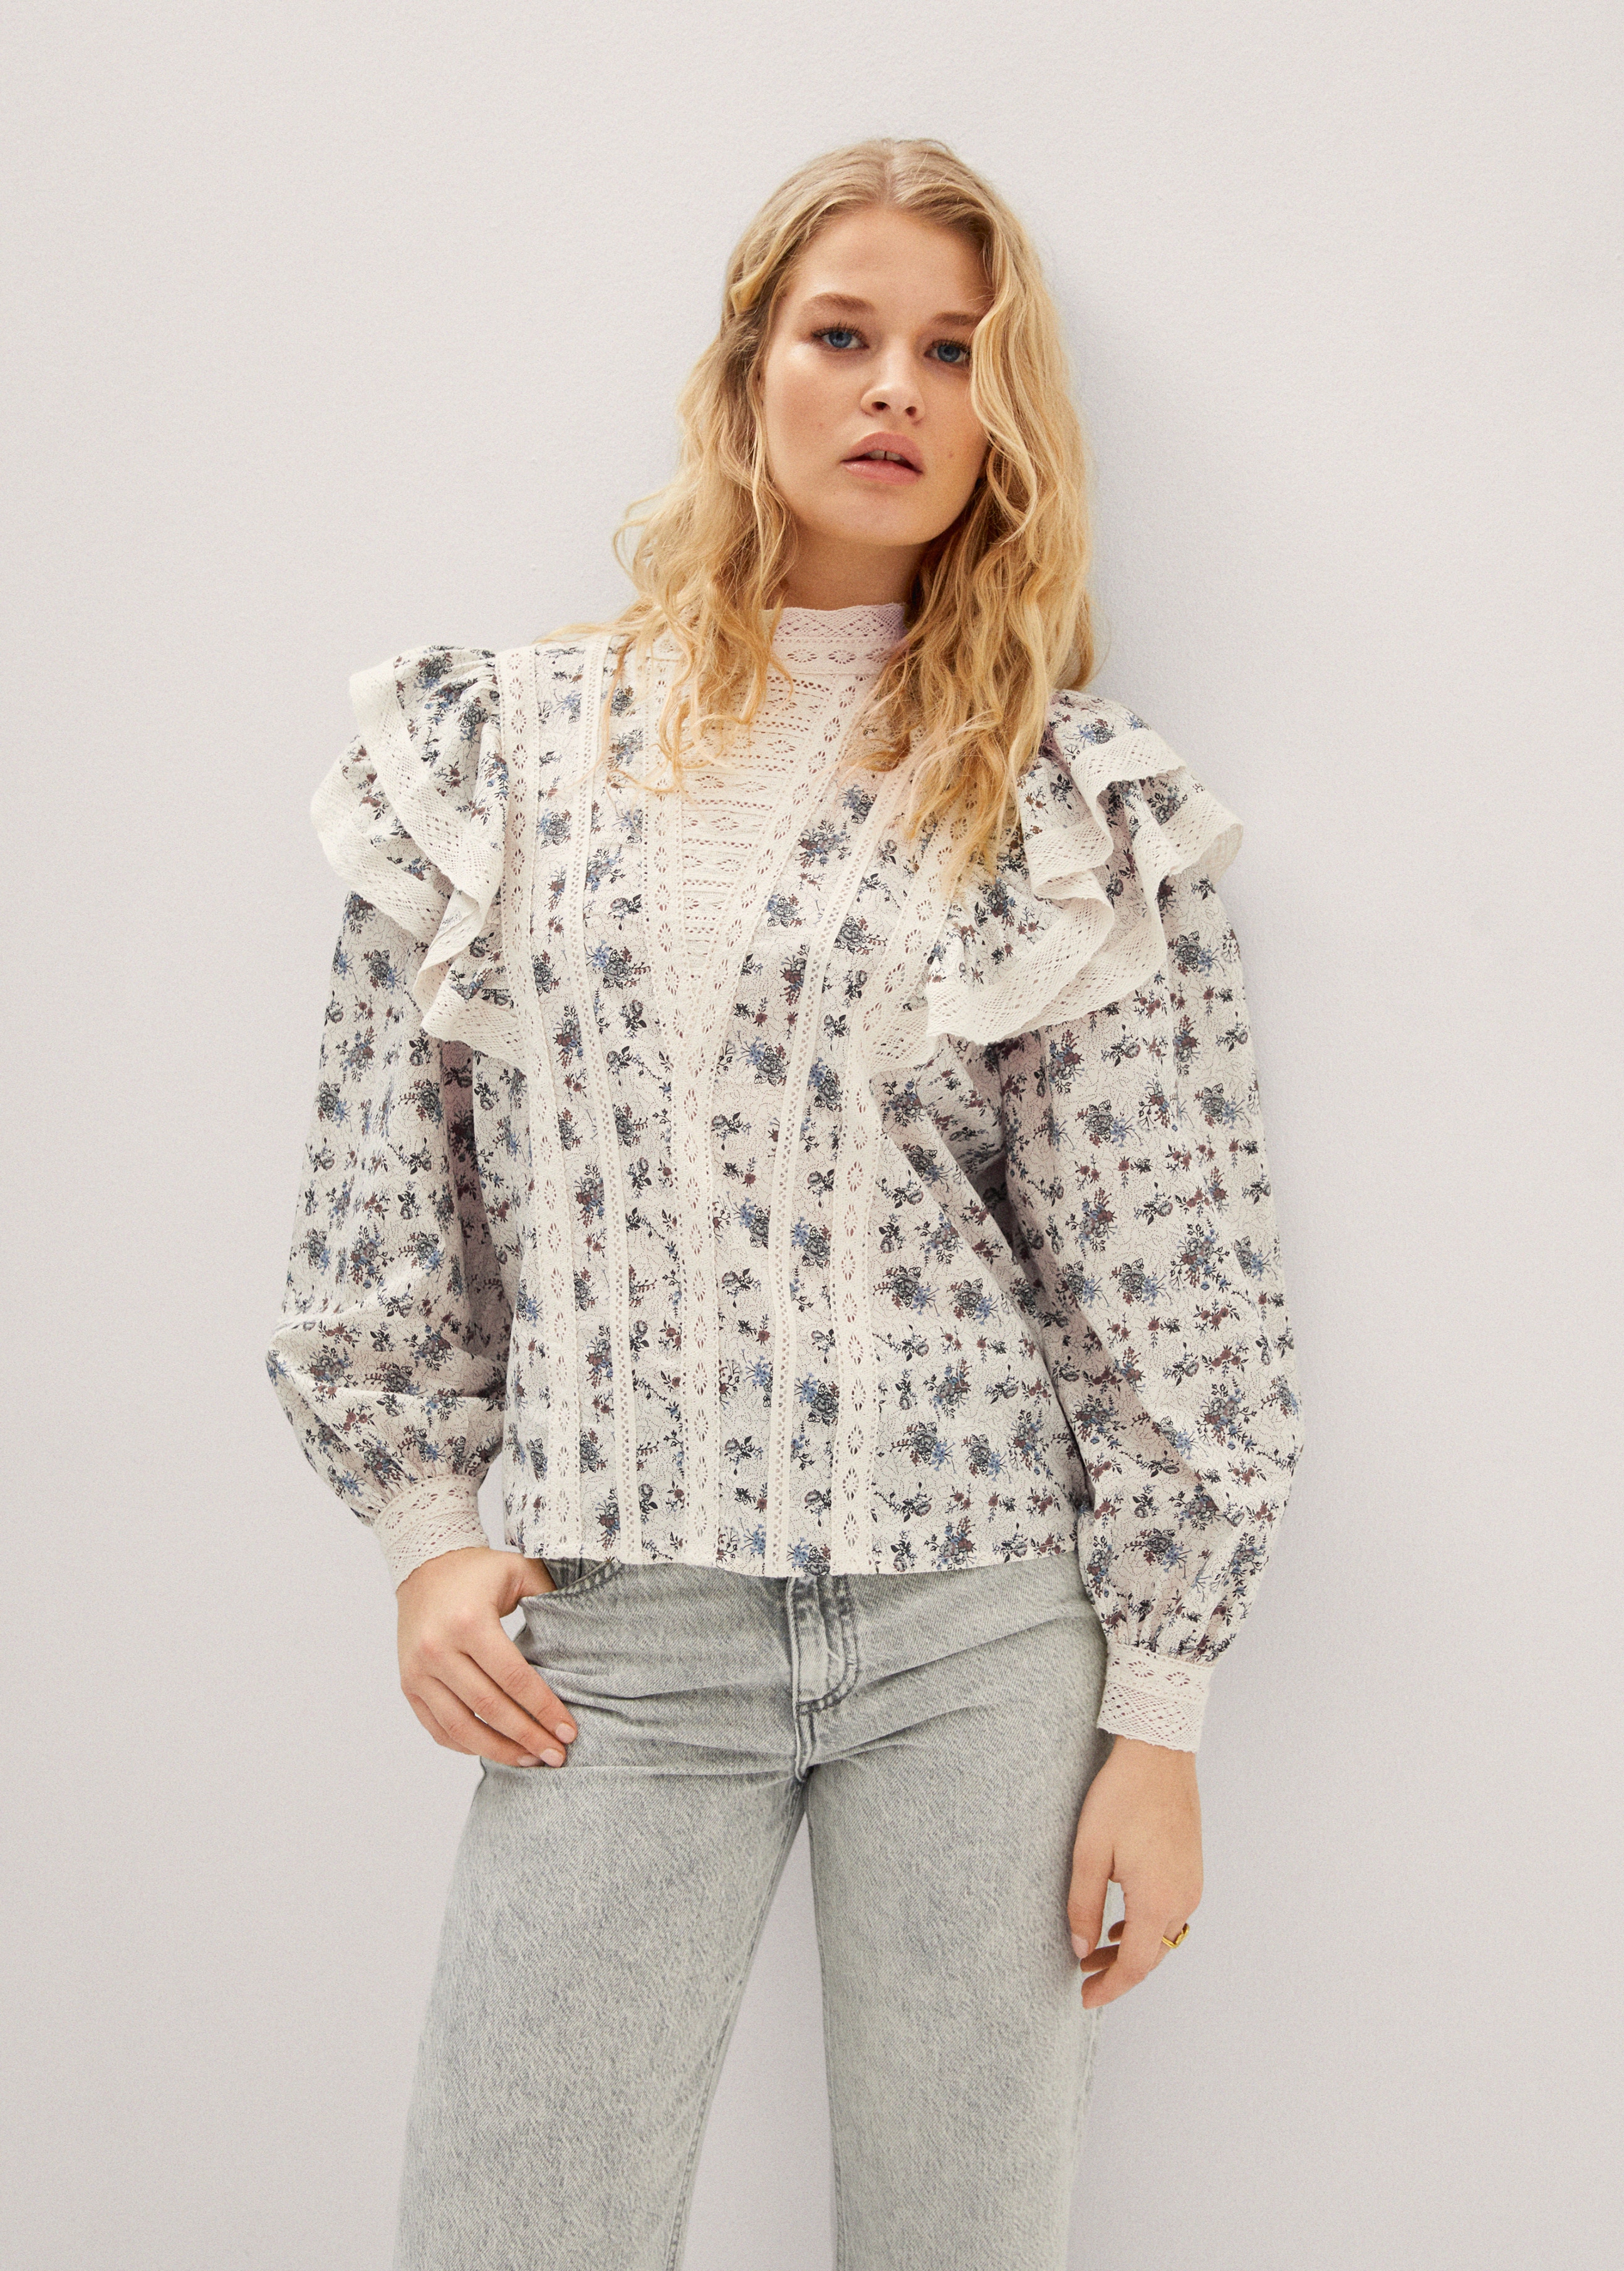 Ruffled embroidered blouse - Medium plane